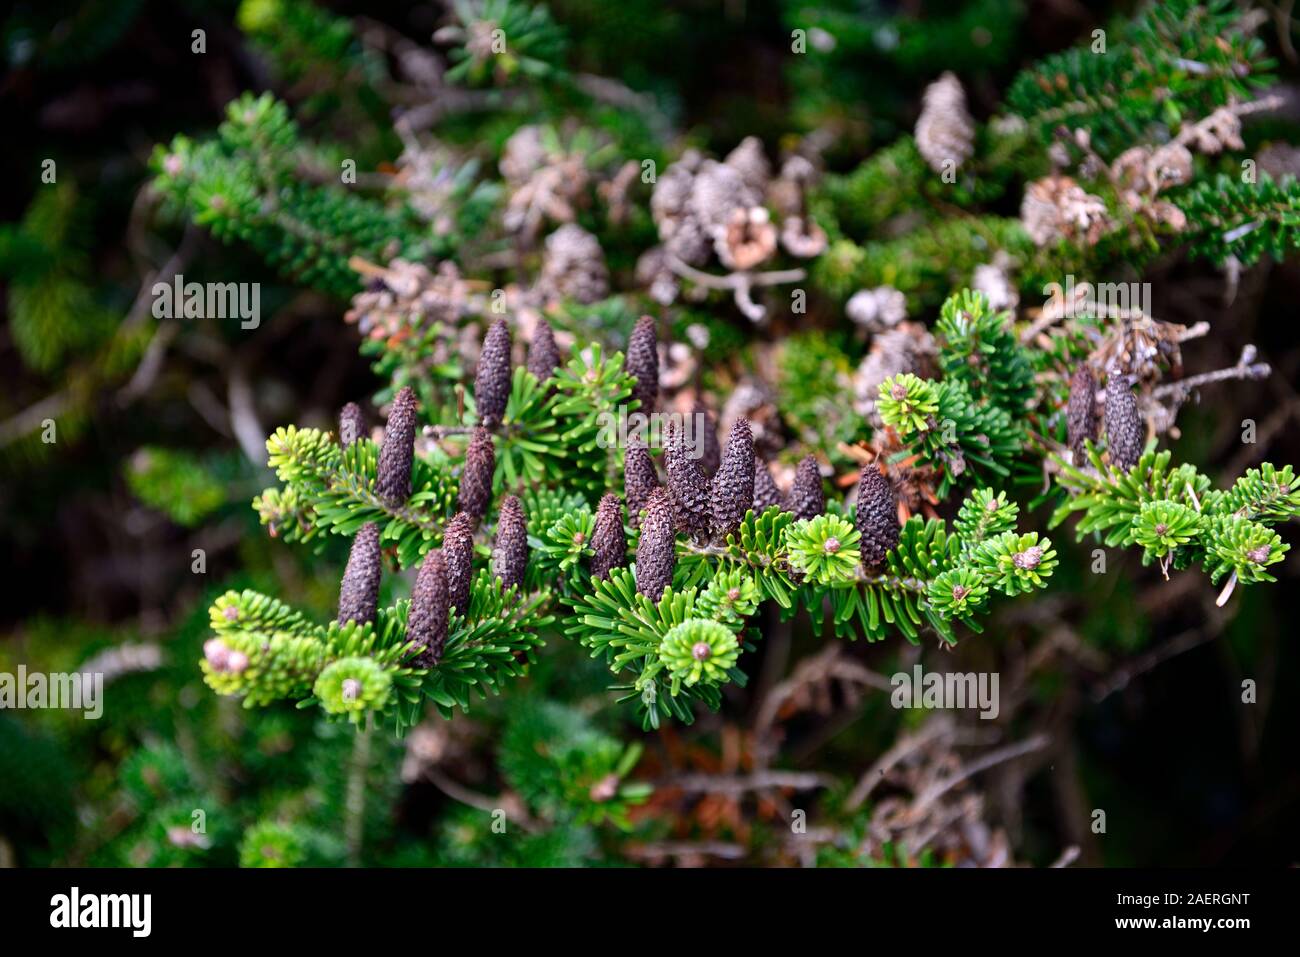 abies koreana,Korean fir,conifers,cone, cones,attractive evergreen,evergreens,conifers,RM Floral Stock Photo